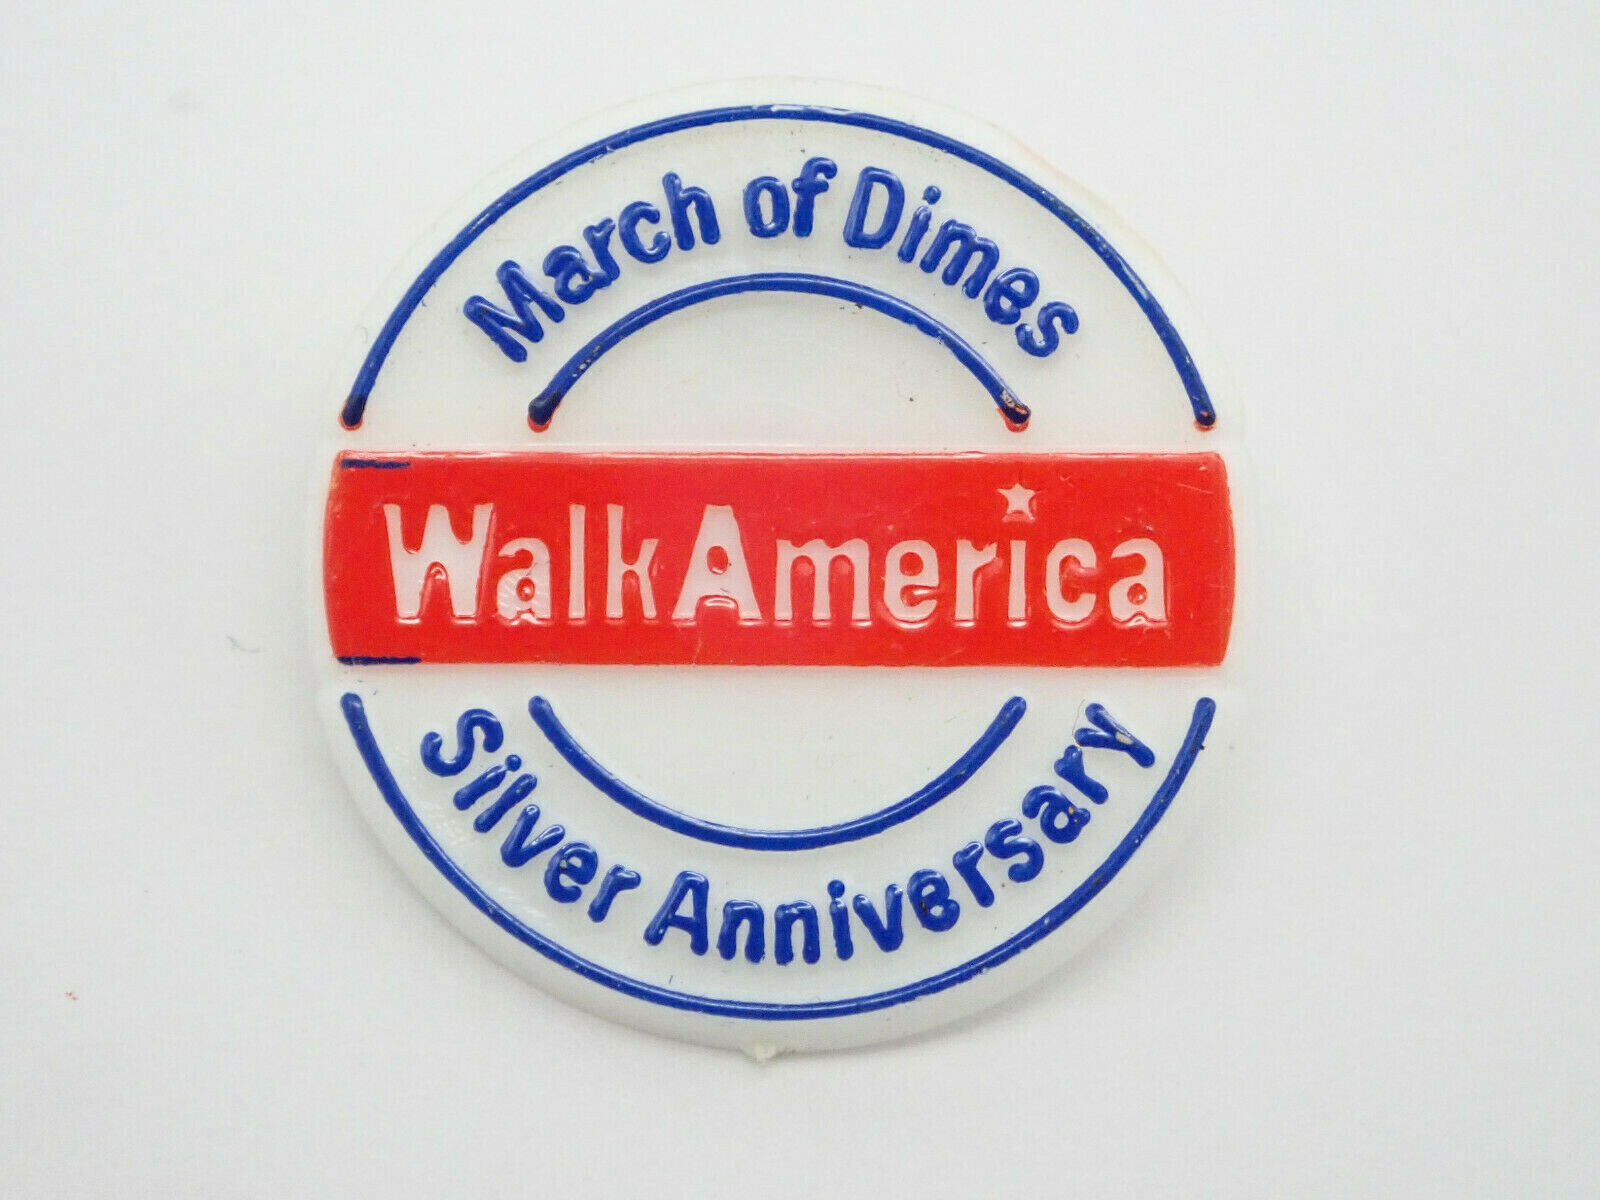 Walk America March of Dimes Silver Anniversary Vintage Lapel Pin